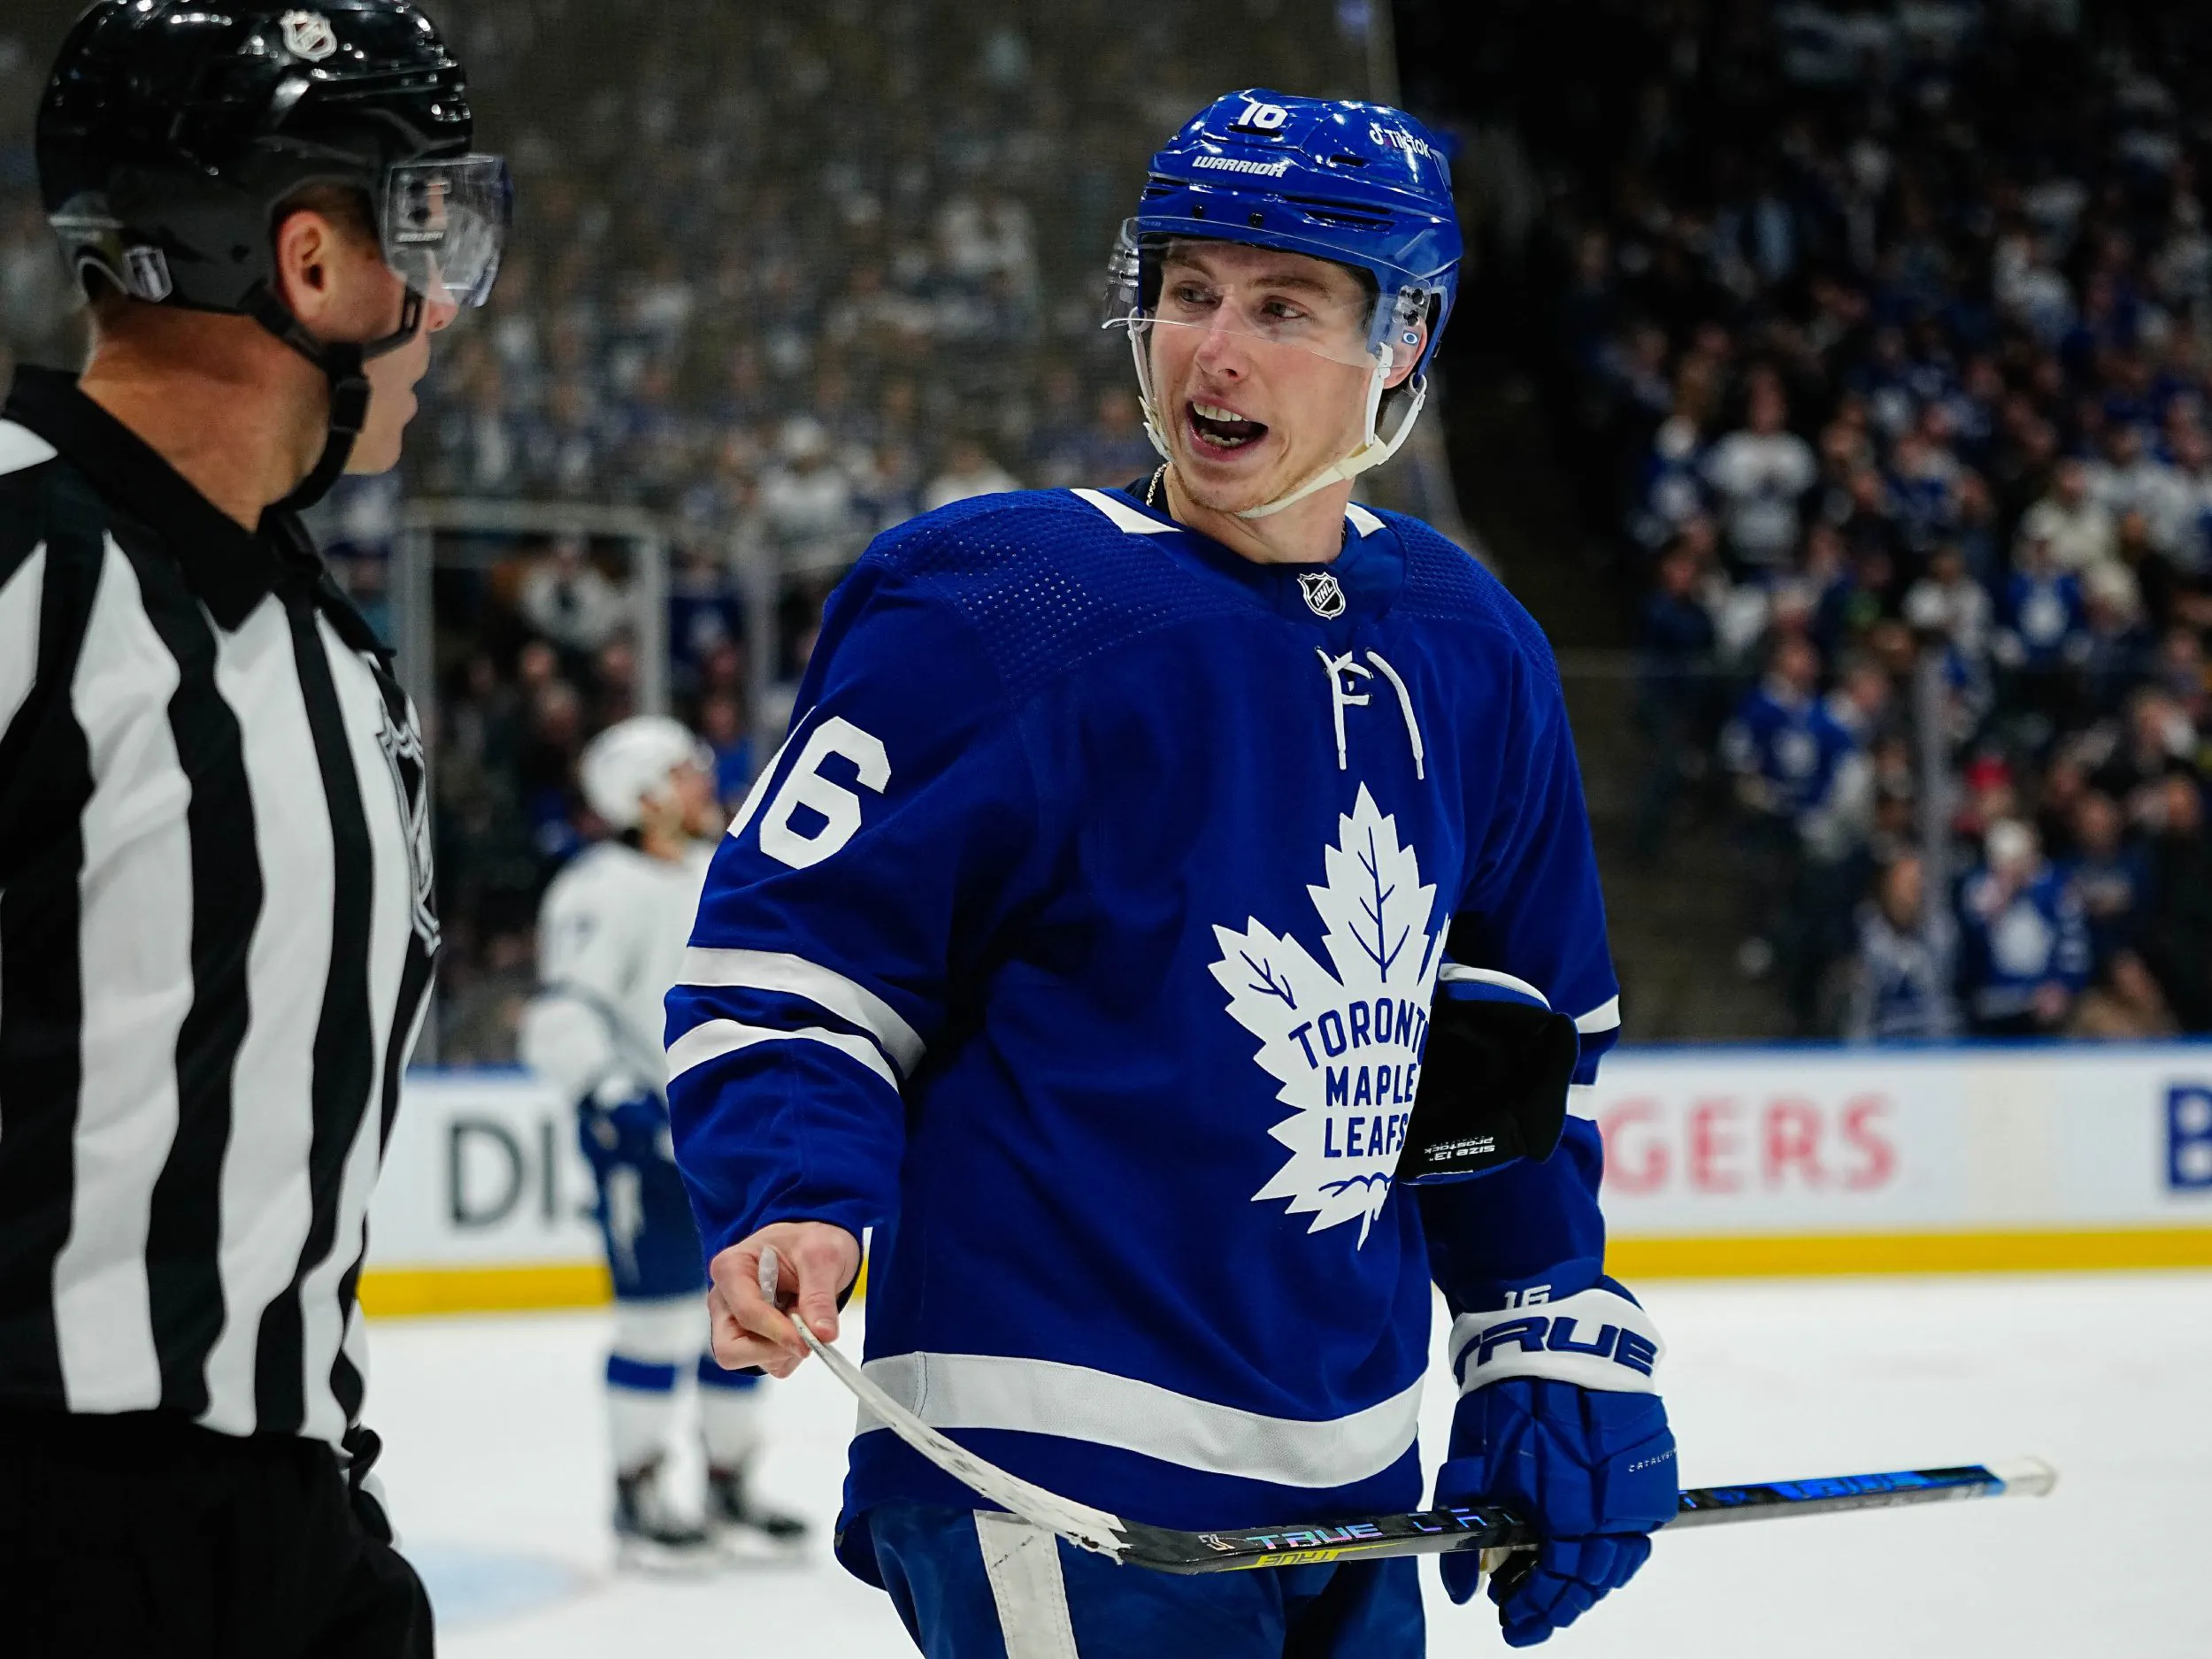 Report: Toronto Maple Leafs forward Mitch Marner carjacked at gunpoint